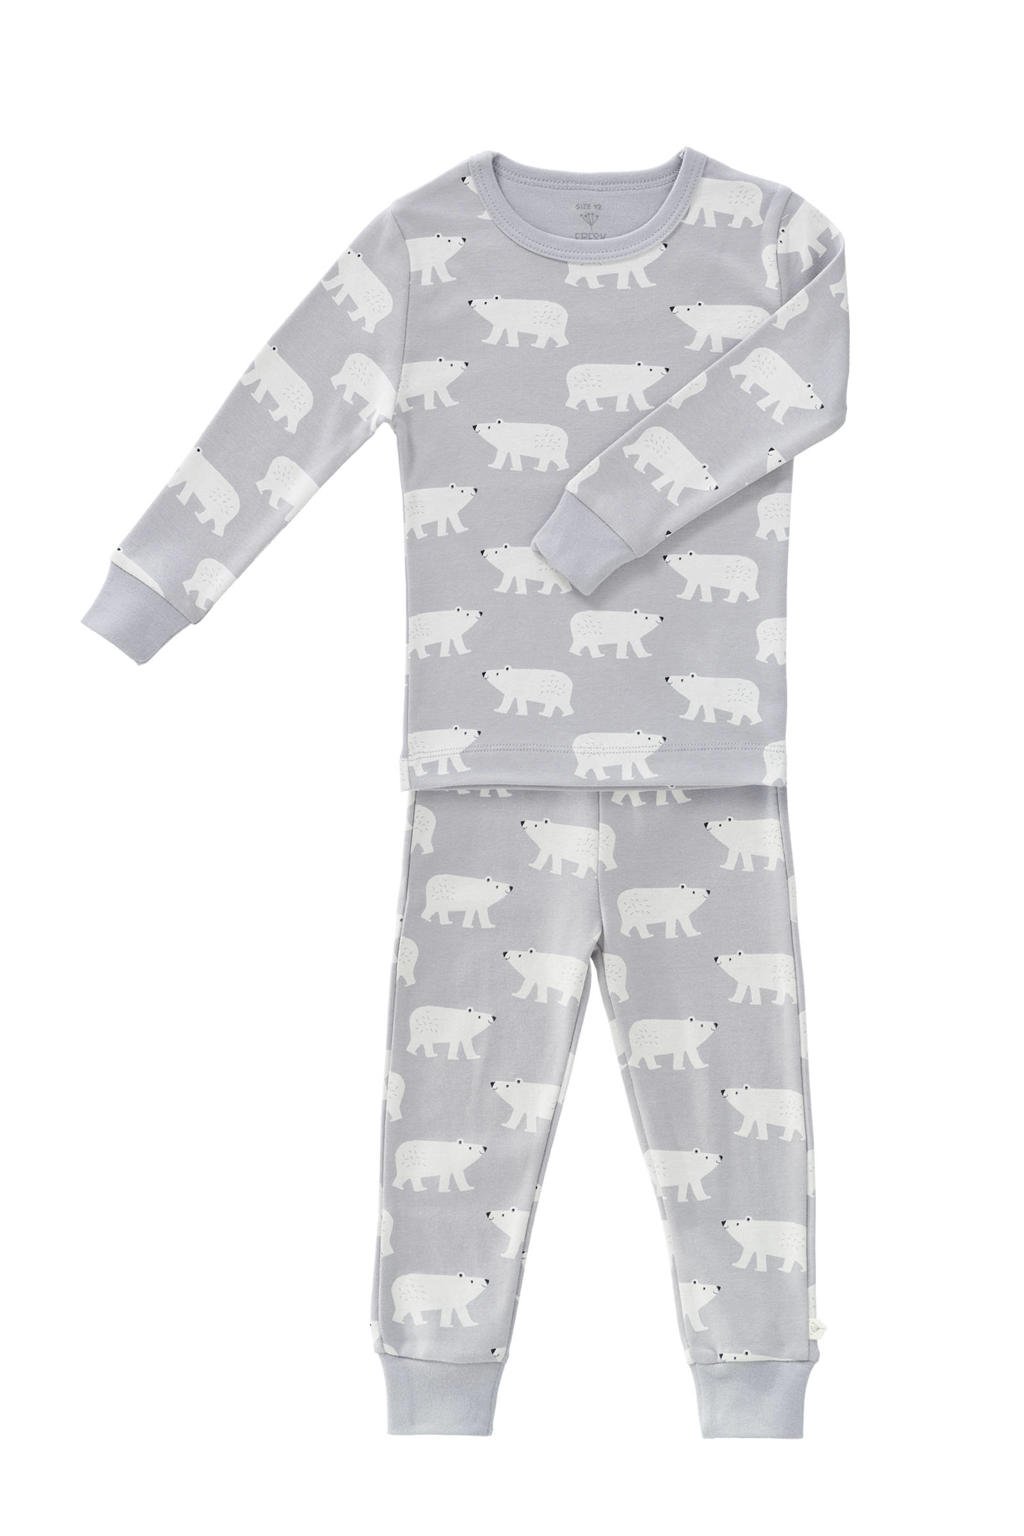 Fresk   pyjama Polar bear lichtgrijs